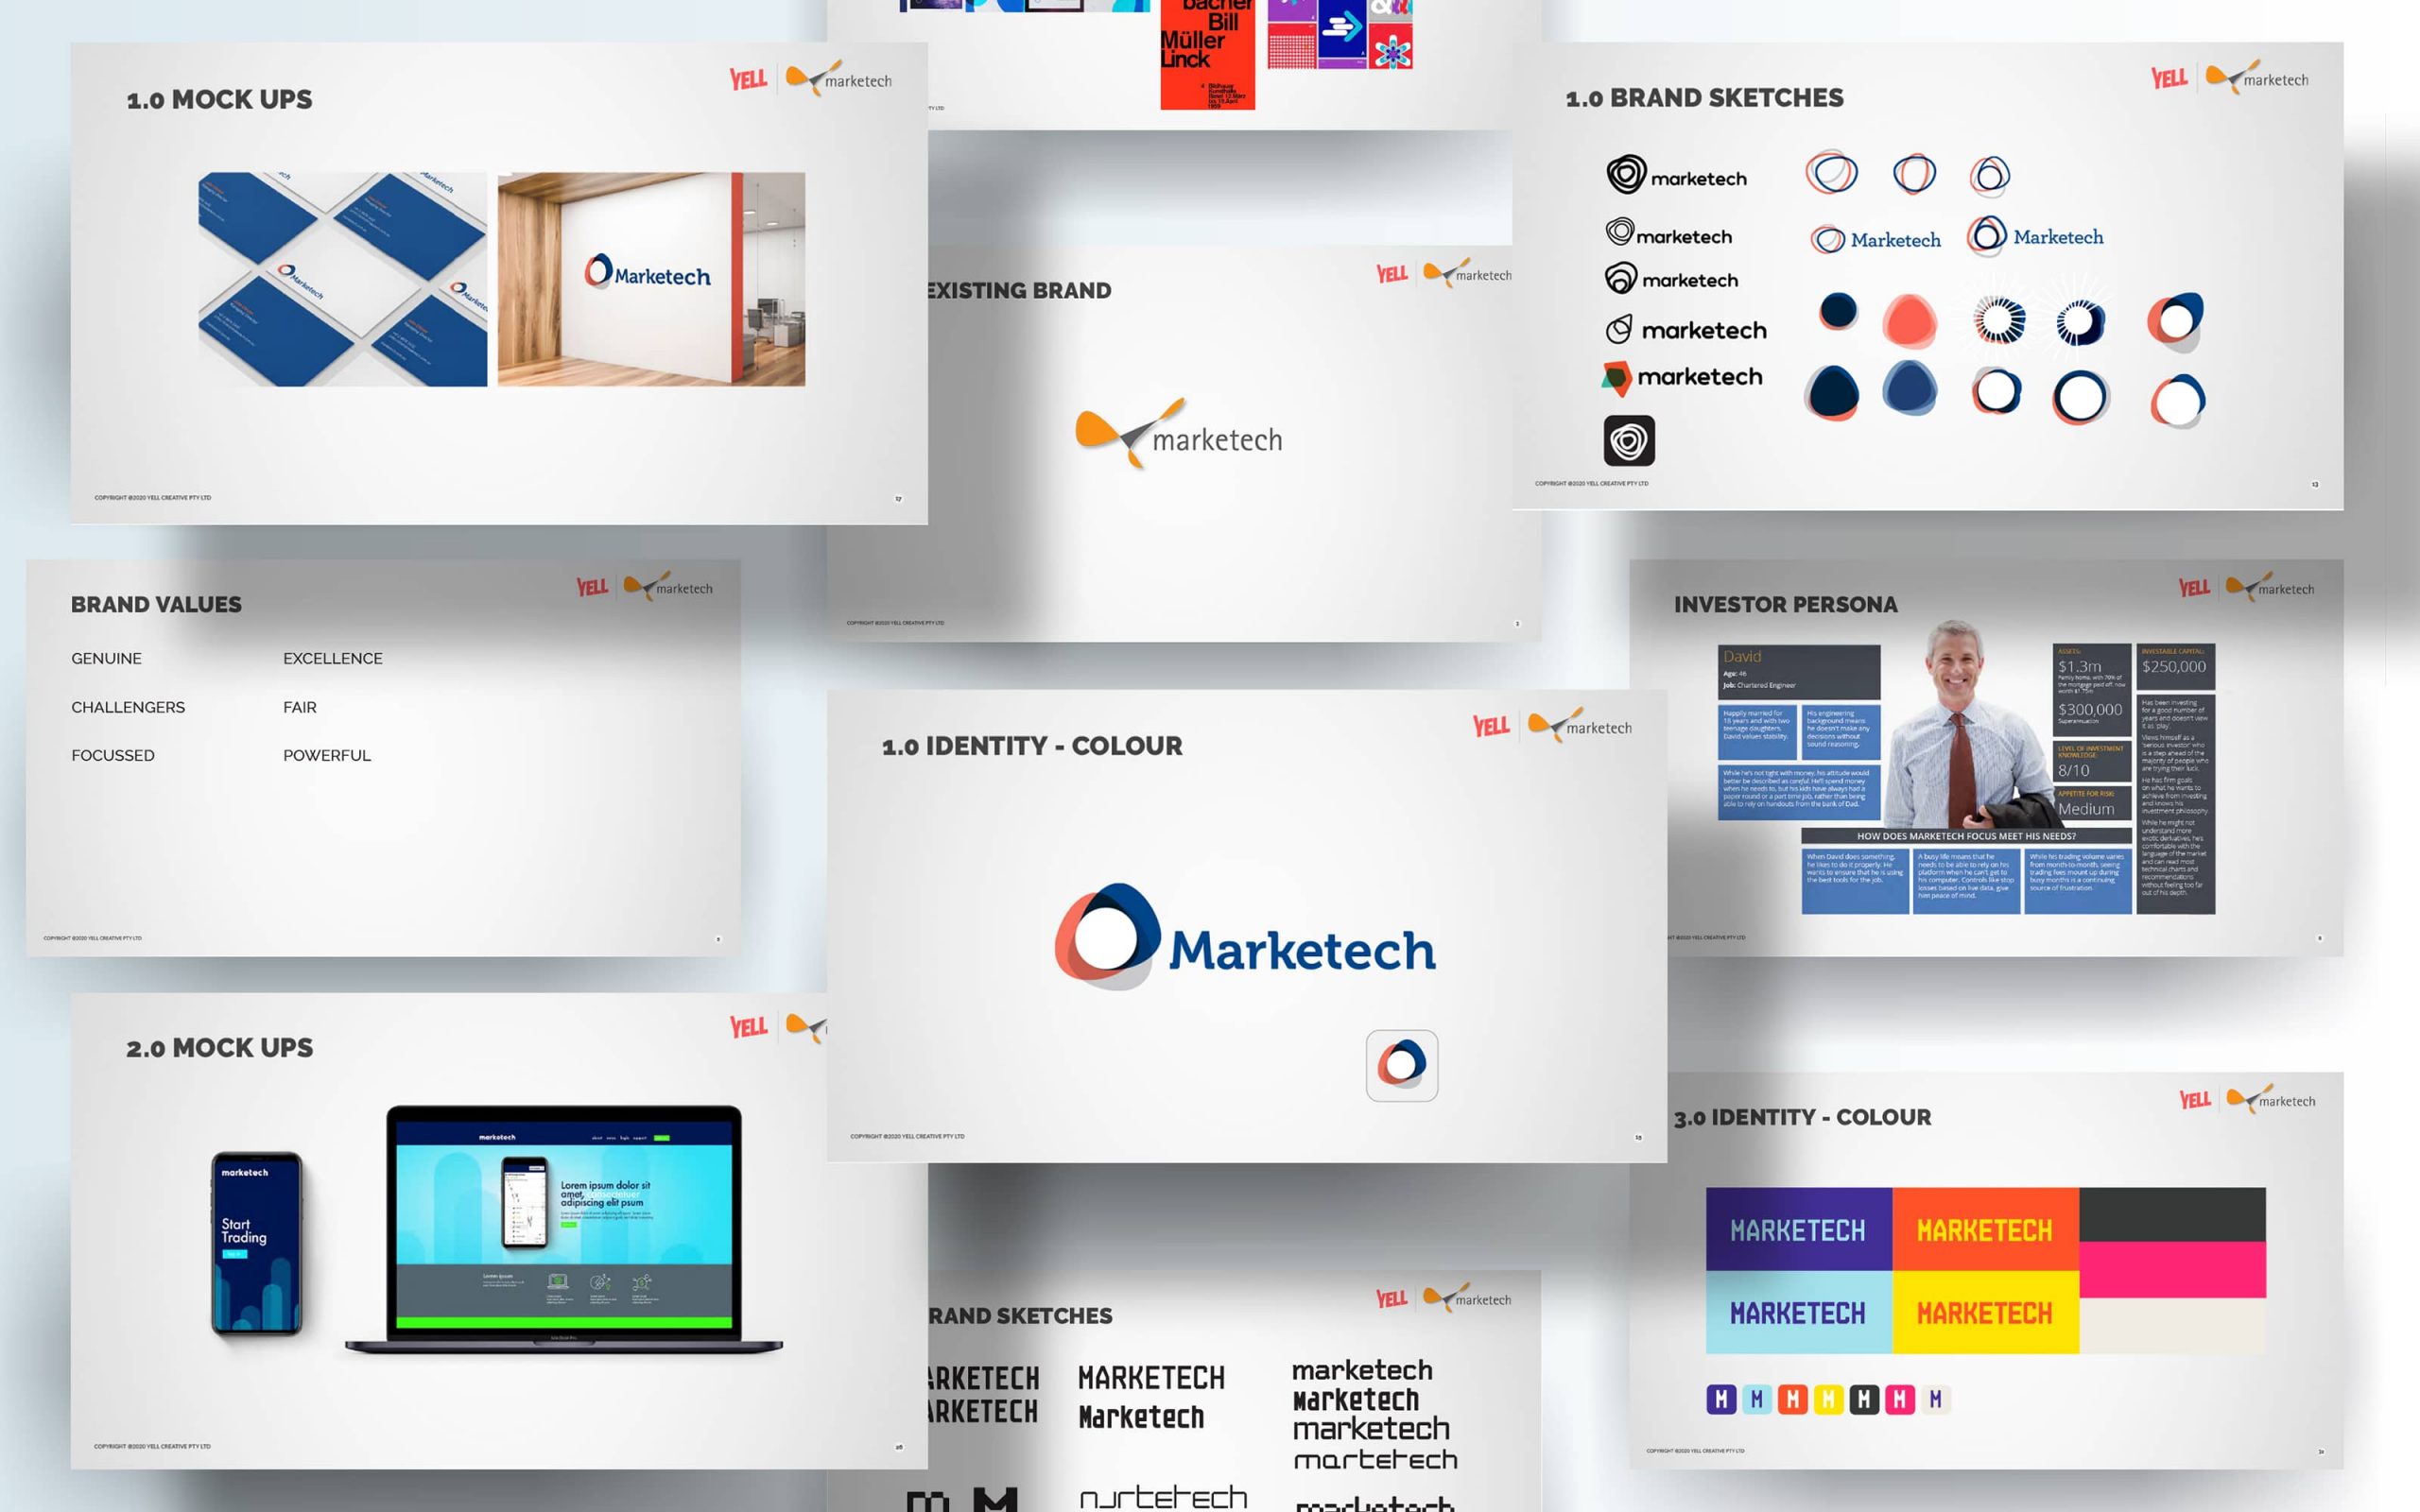 marketech-brand-image01_-min